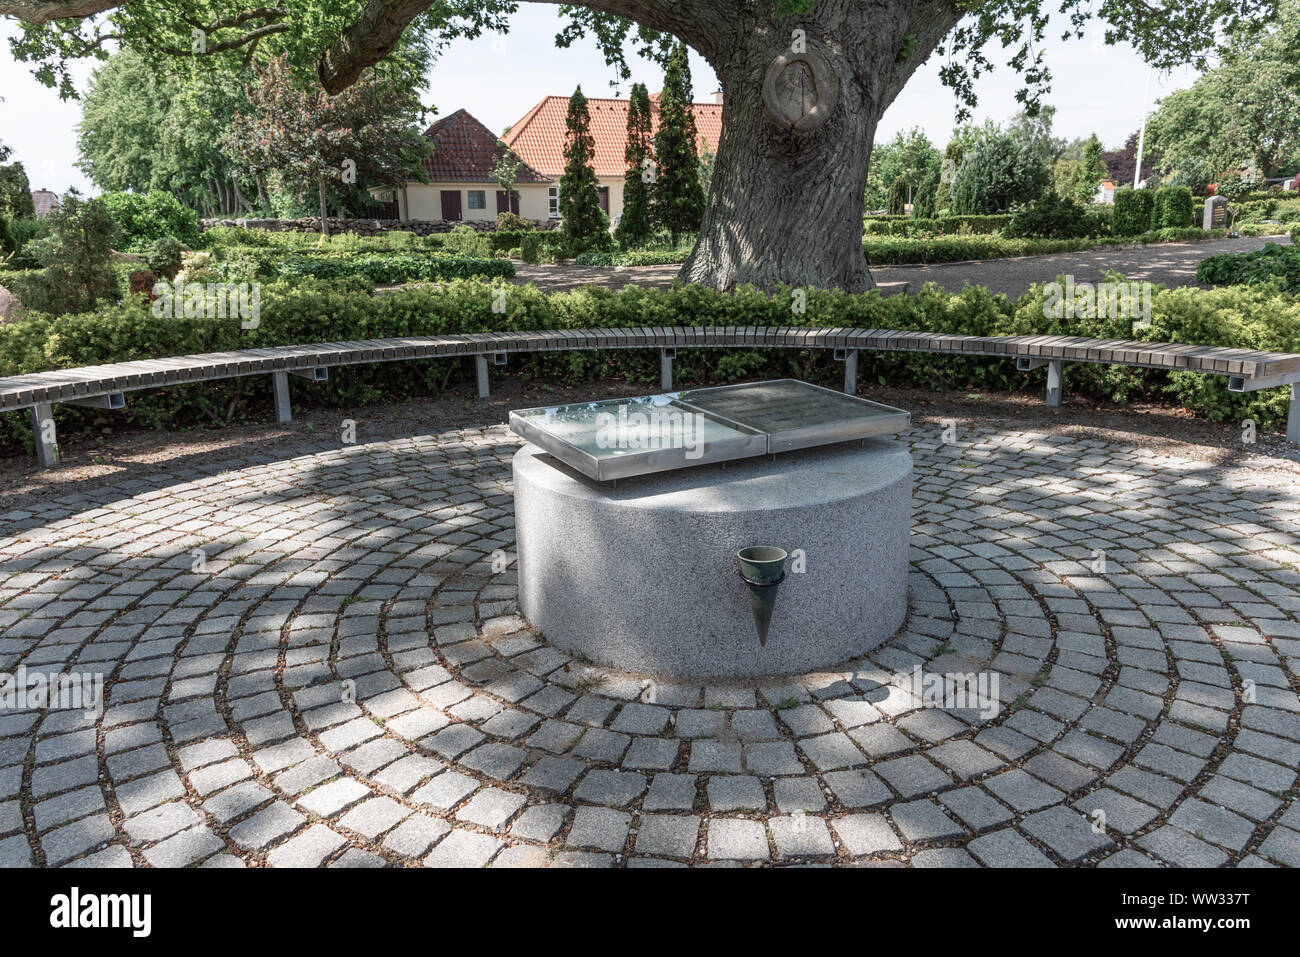 Il luogo memoriale di Elvira Madigan e Sixten Sparre a Landet cimitero, Svendborg, Danimarca, 11 Luglio 2019 Foto Stock